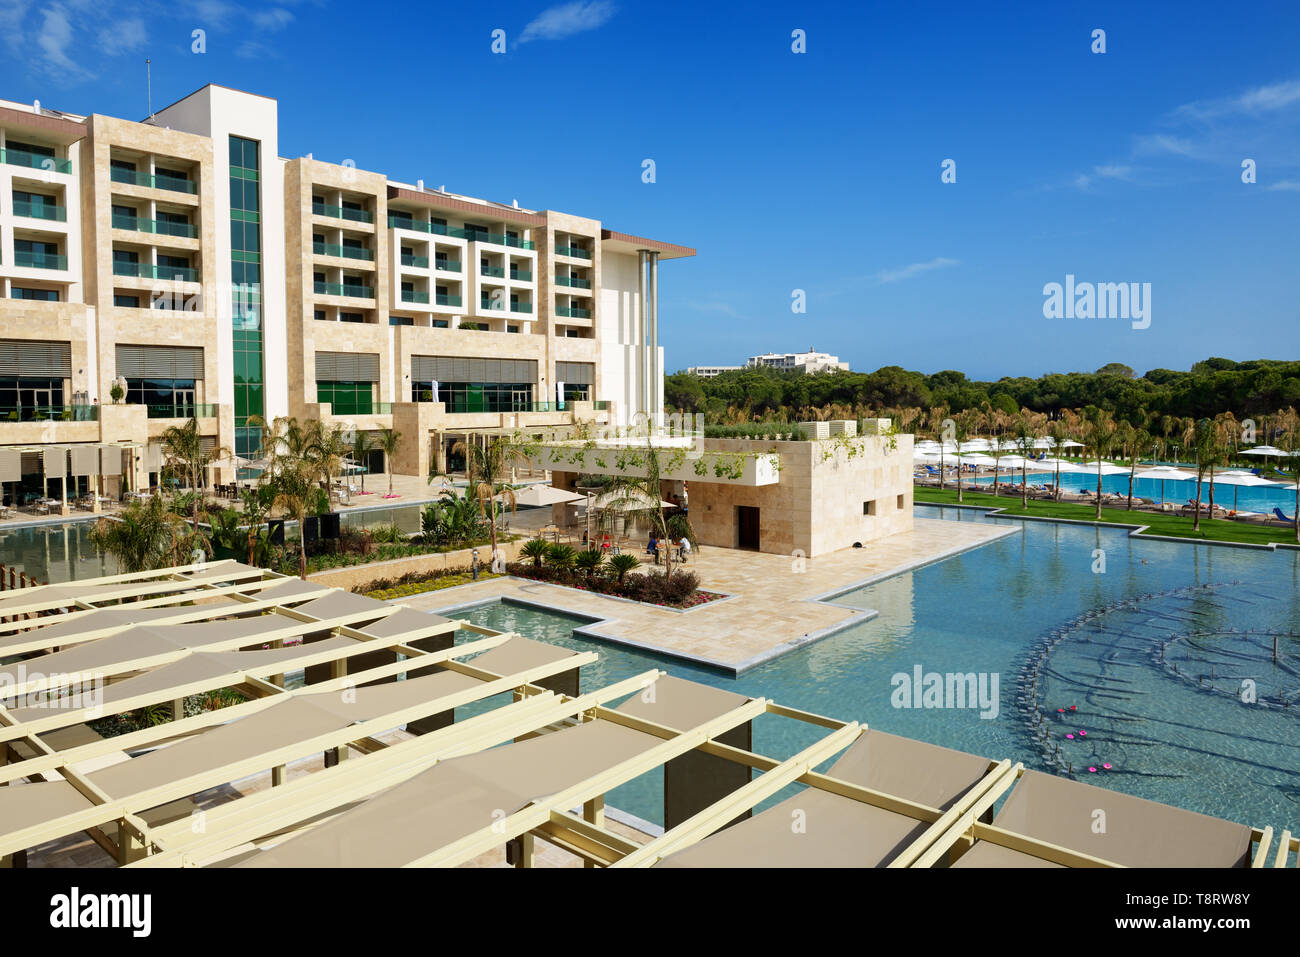 ANTALYA, TURKEY - APRIL 22: The building and swimming pool of Regnum Carya  Golf and SPA resort on April 22, 2014 in Antalya, Turkey Stock Photo - Alamy